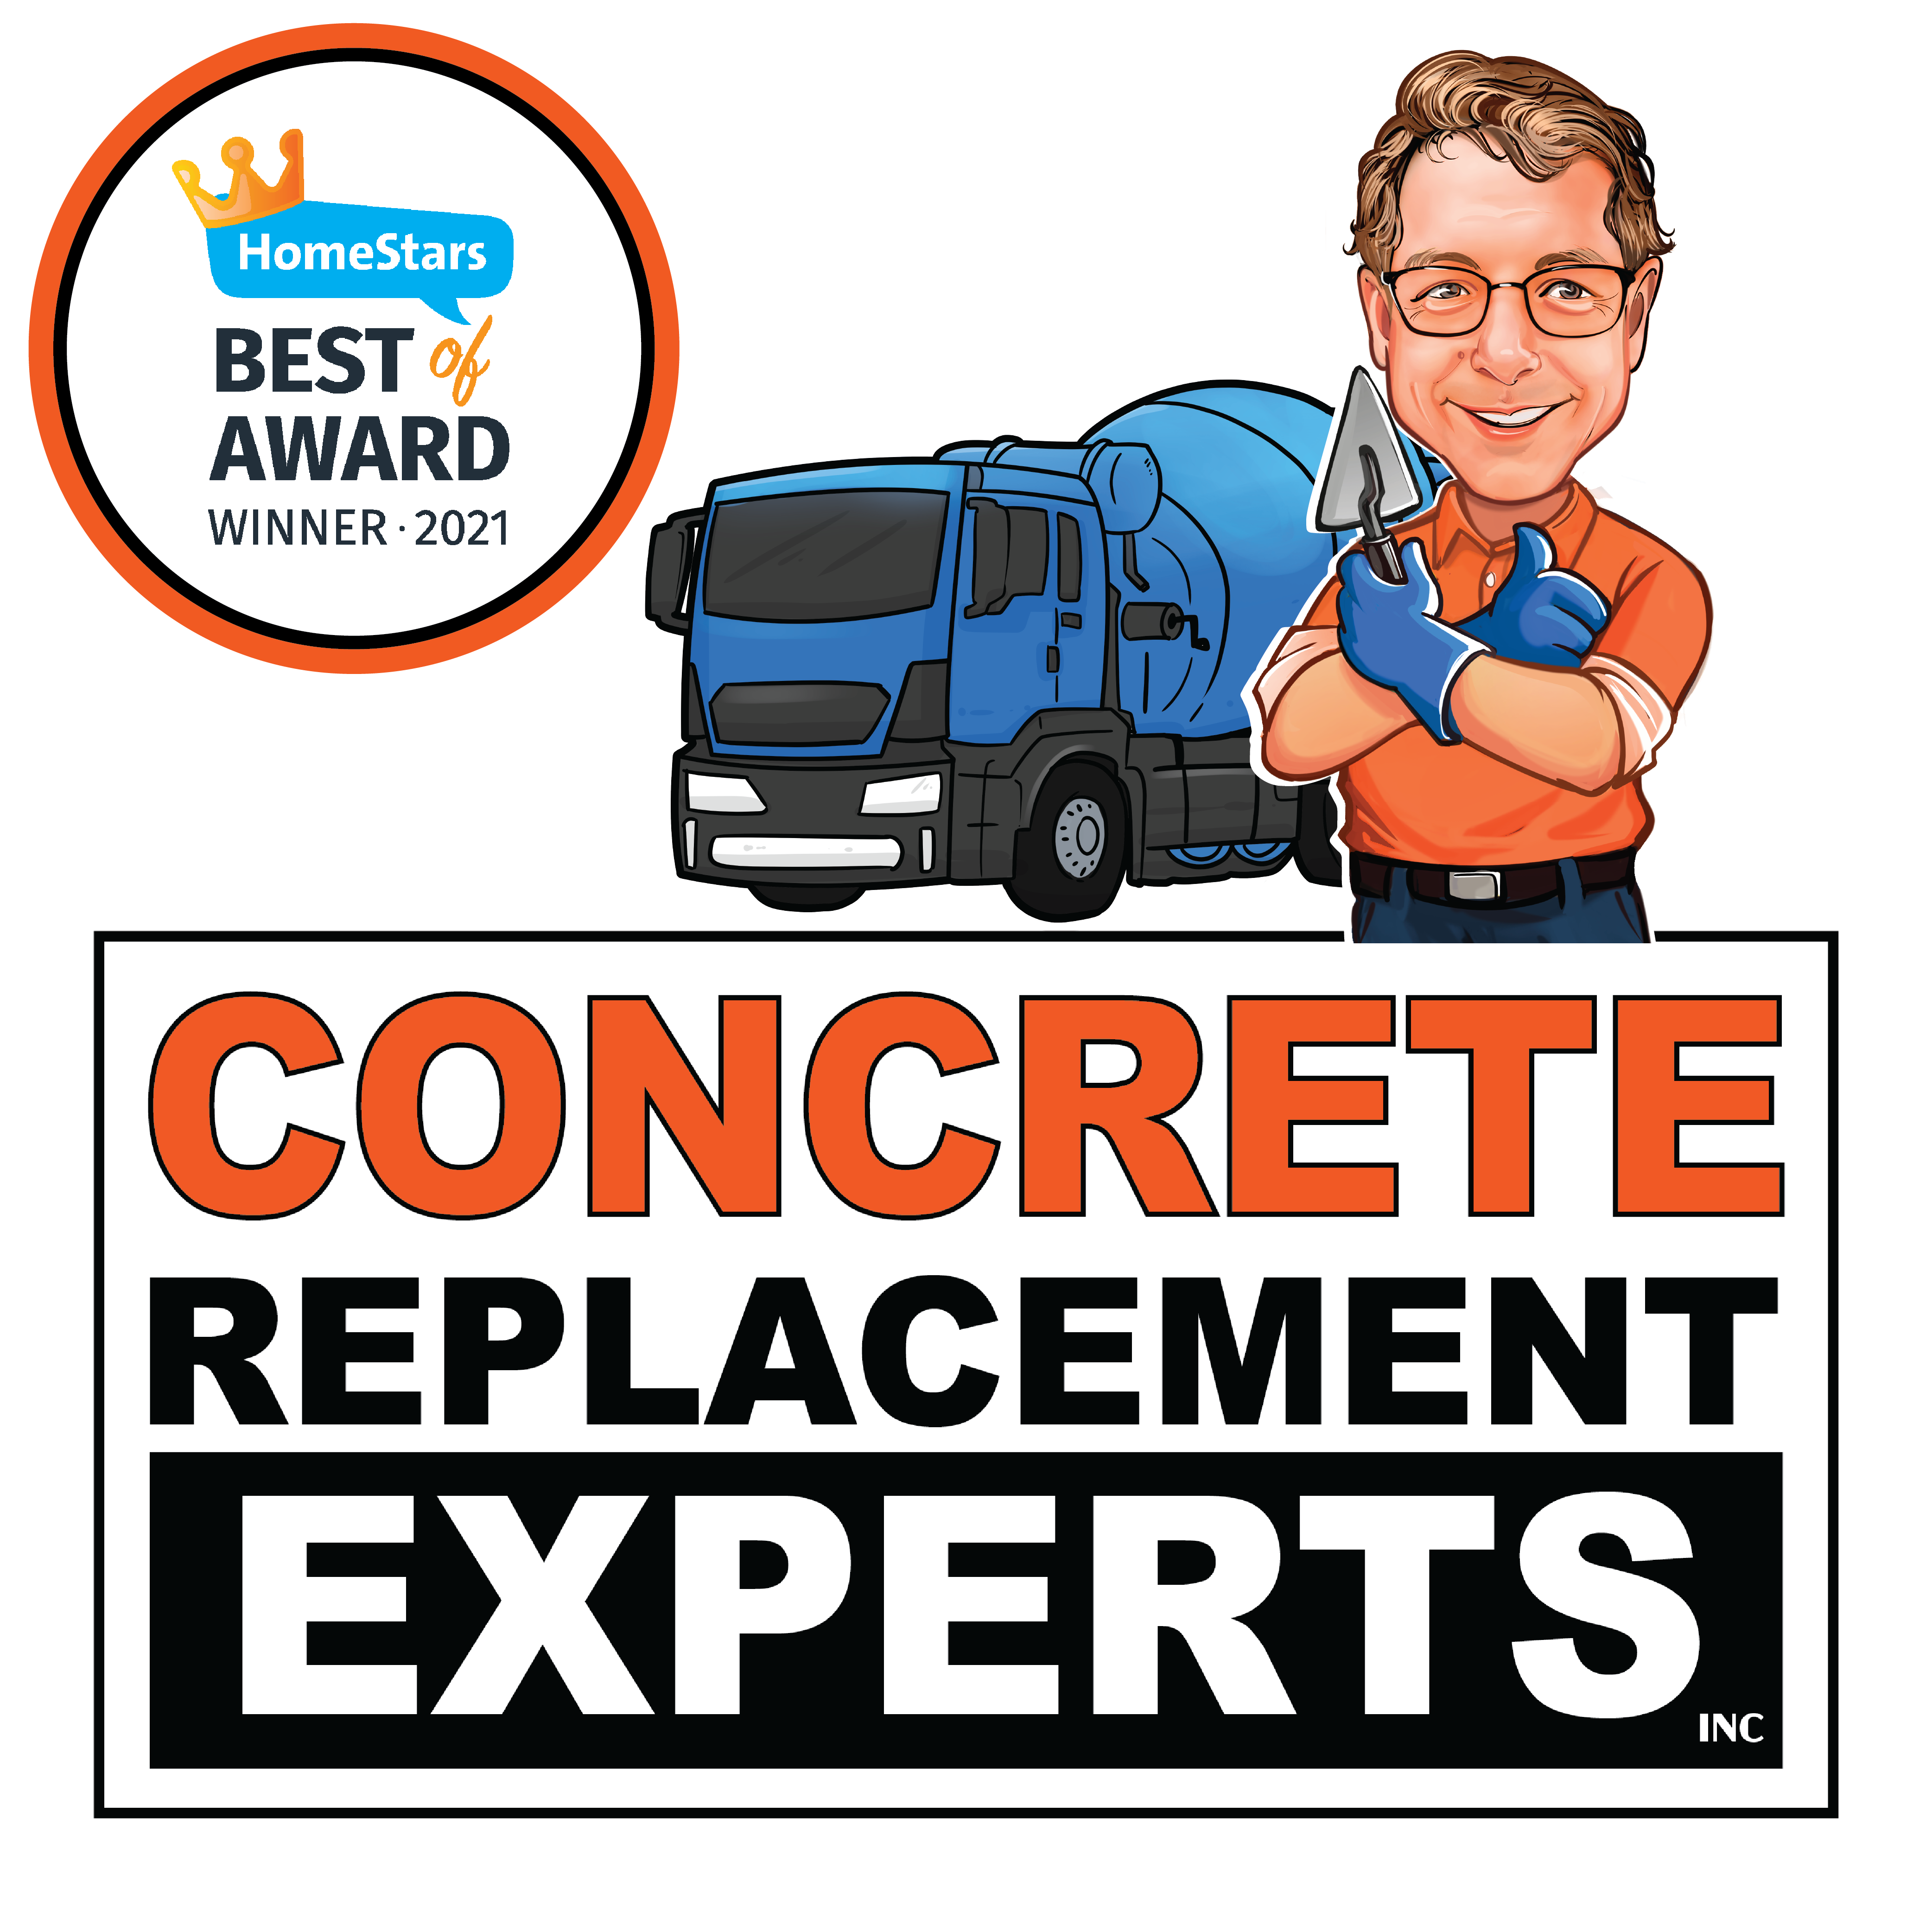 Concrete Replacement Experts Inc.'s logo